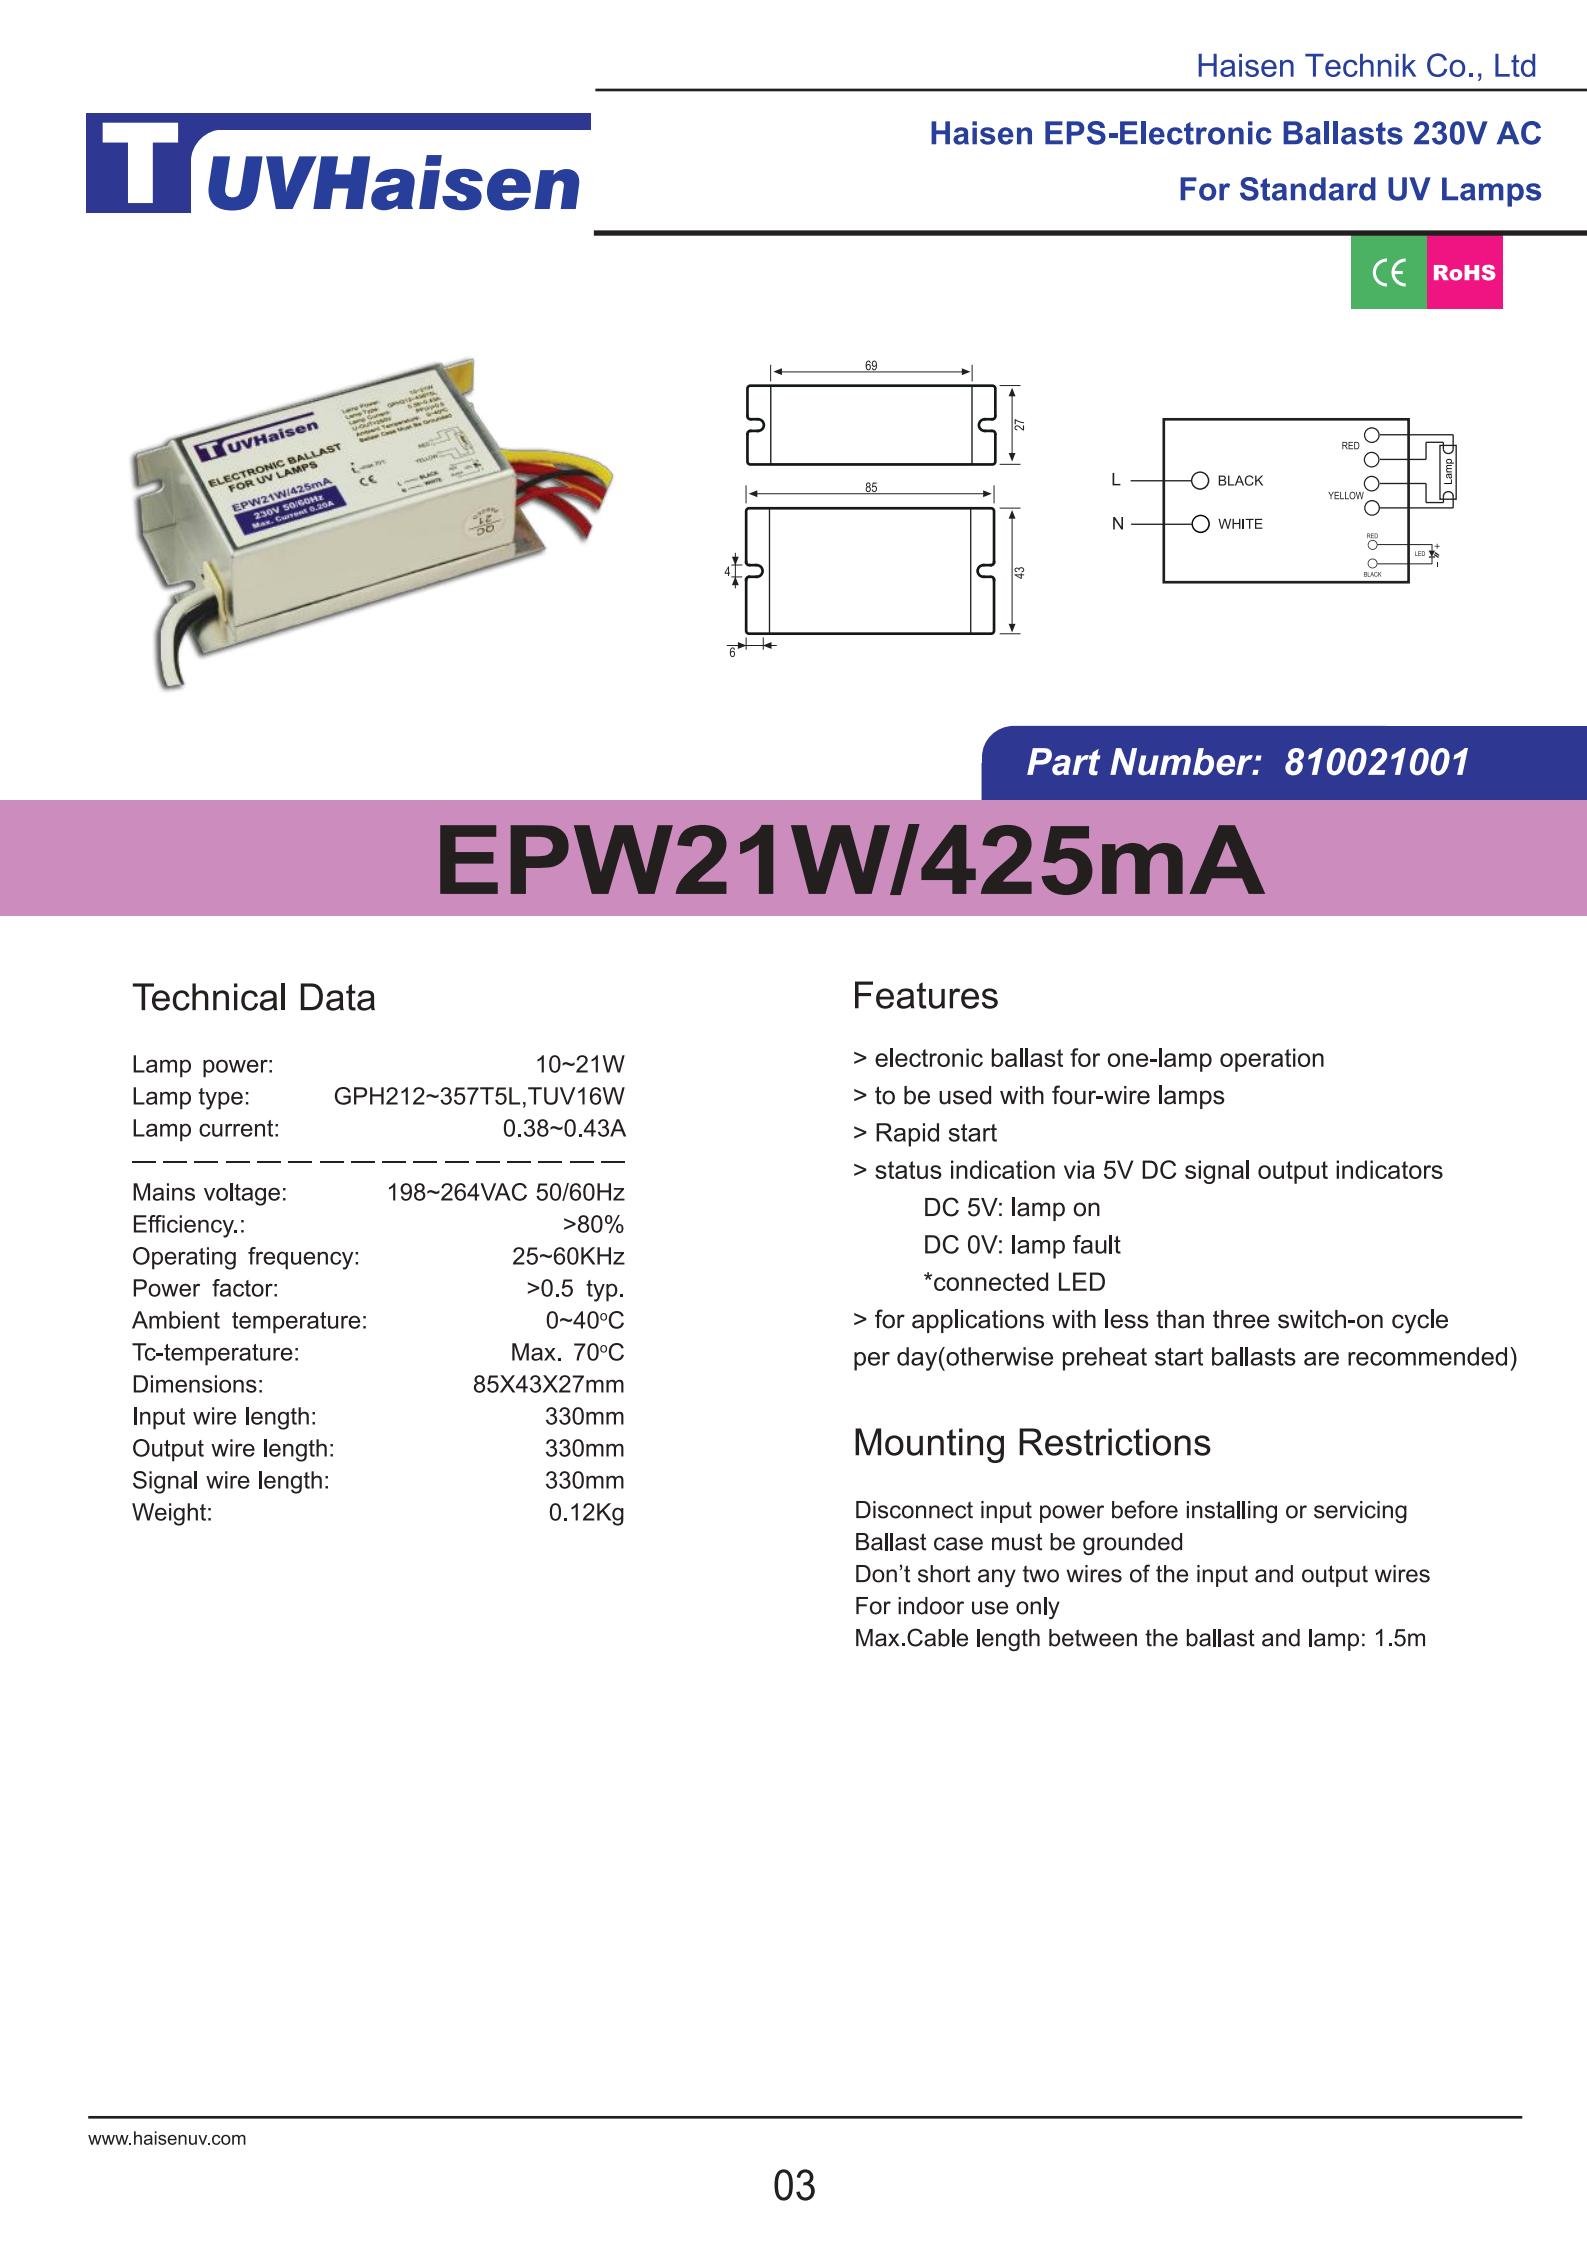  Ultraviolet Ballast EPW21W/425mA for uv light